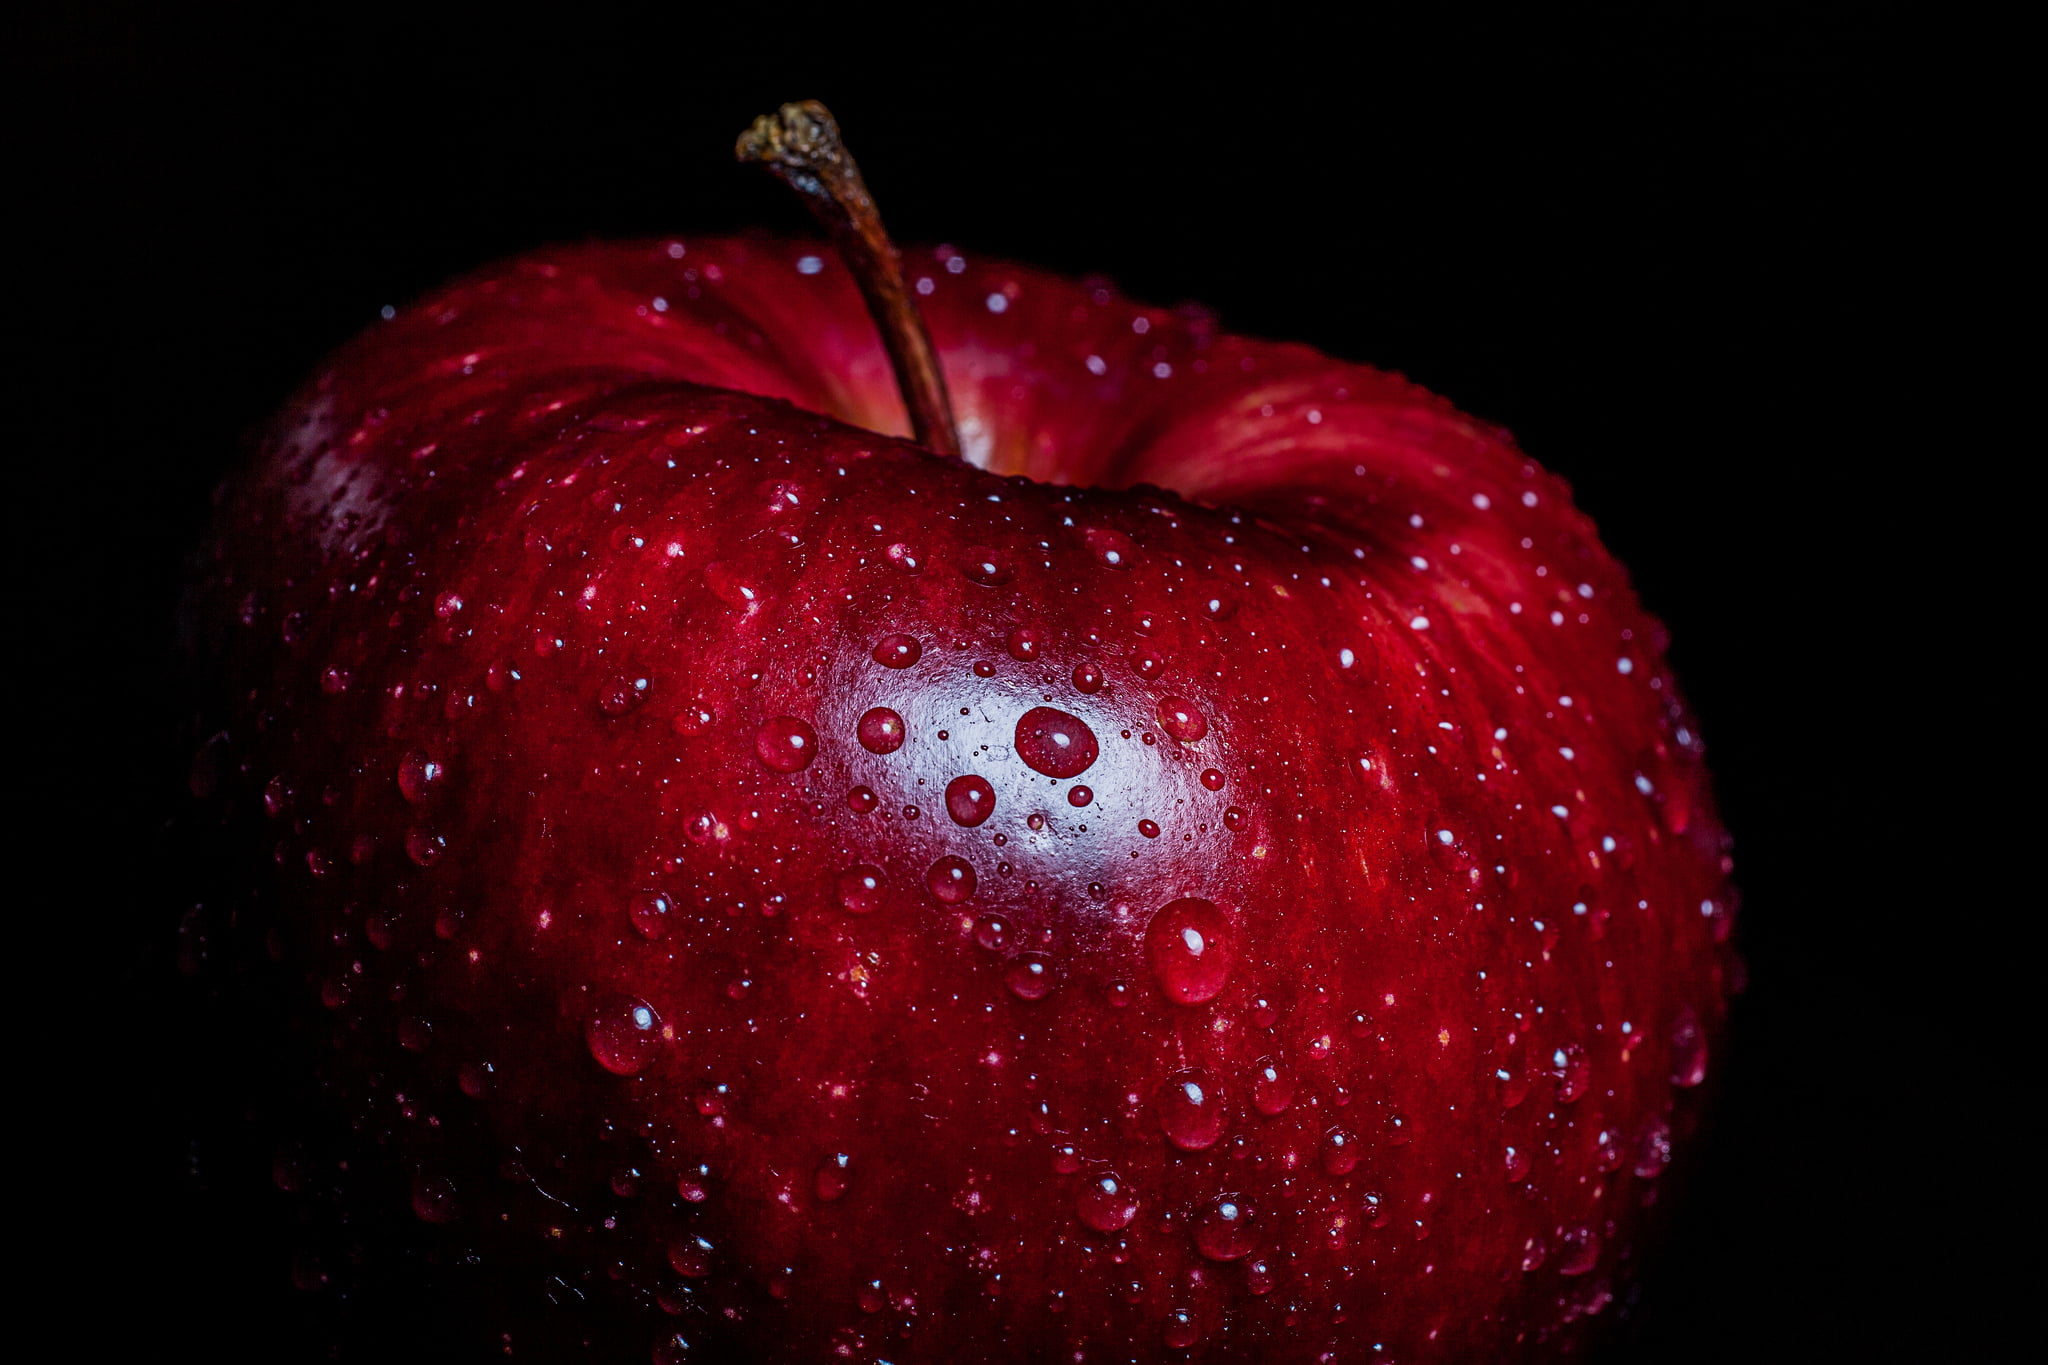 HD apple red logo wallpapers  Peakpx